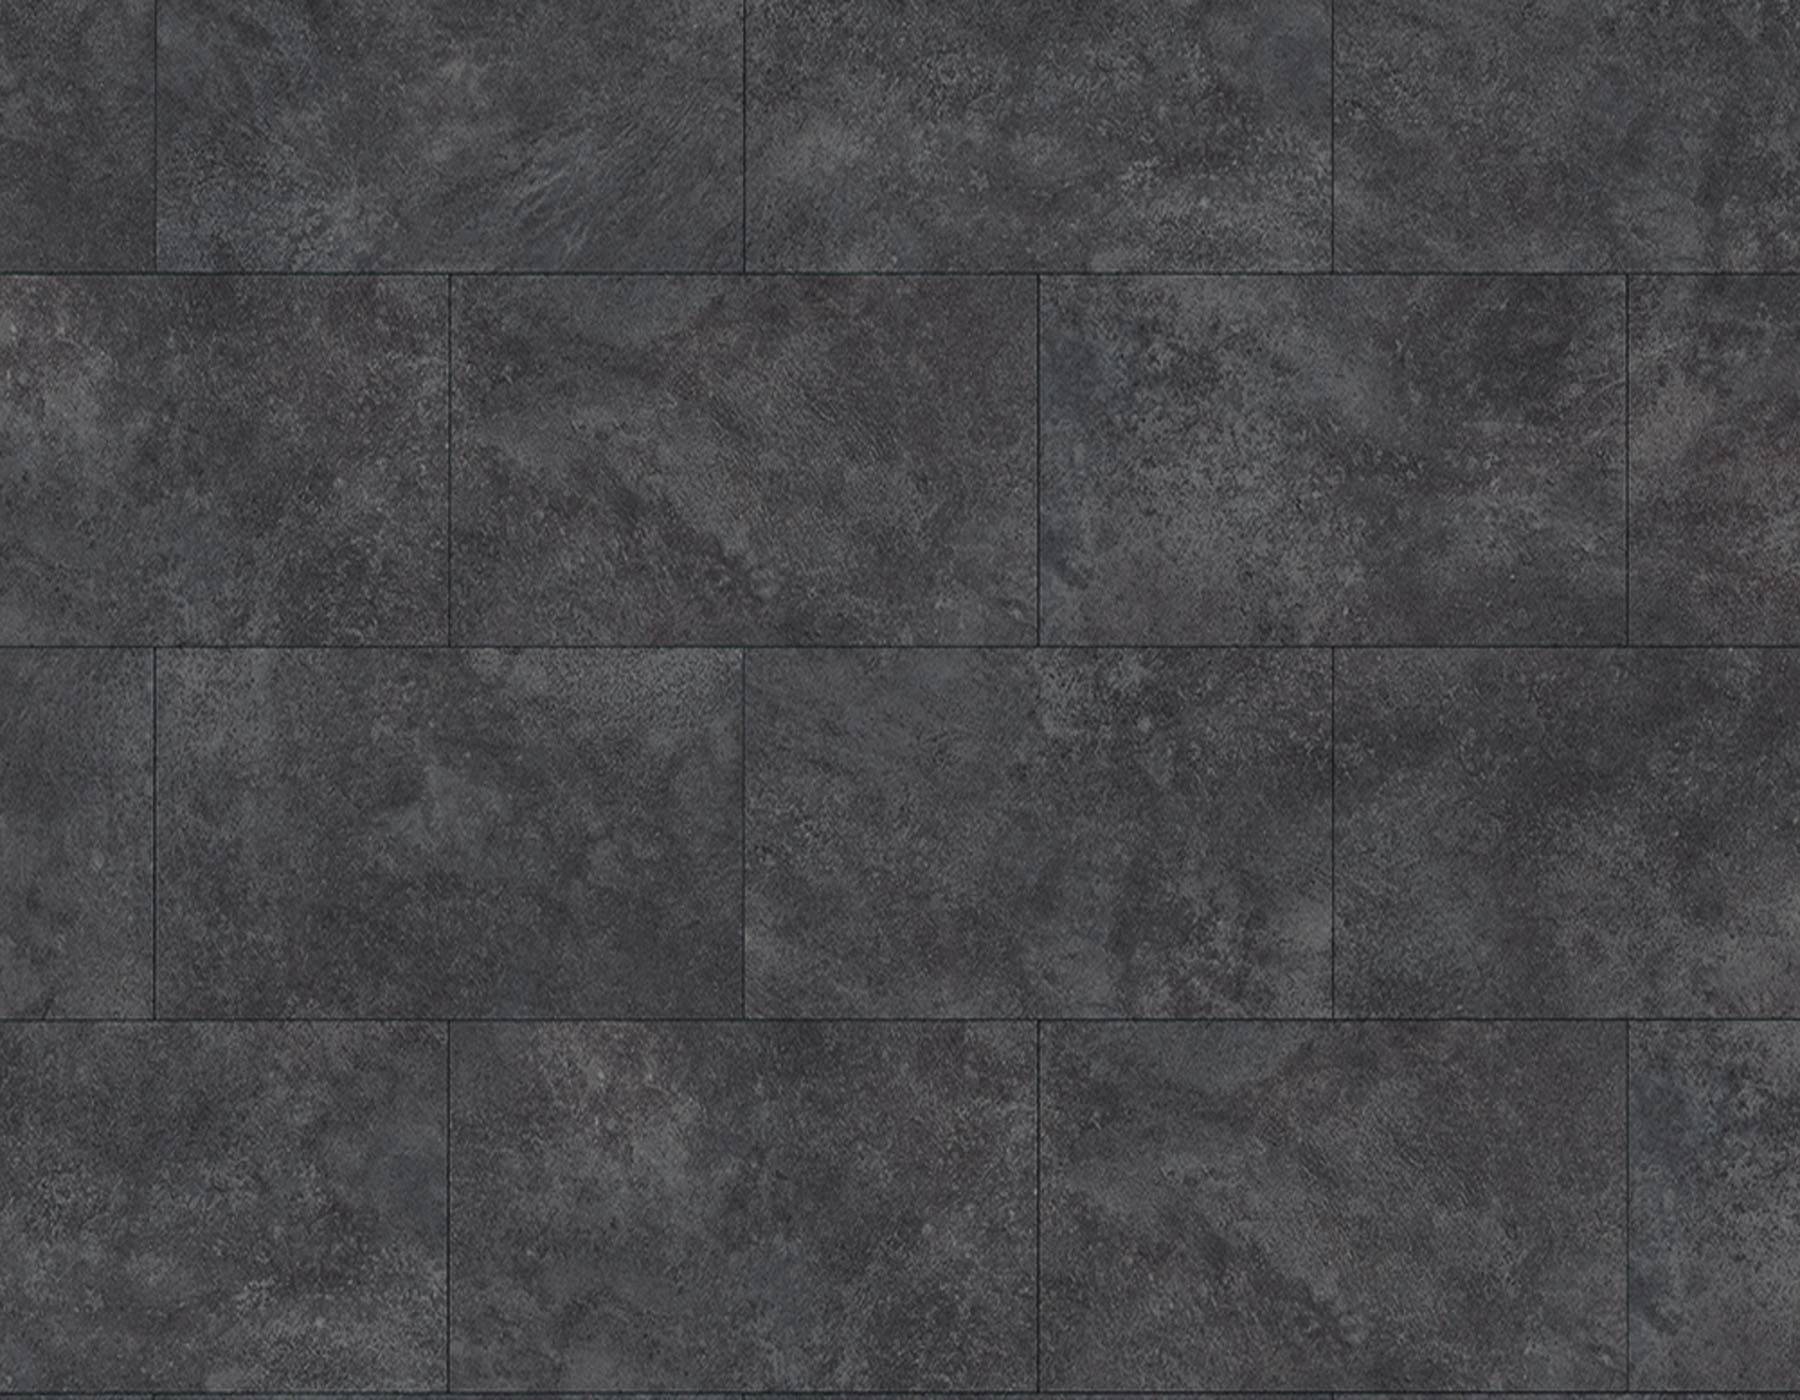 Egger Aqua waterproof Cremento black laminate floor tiles